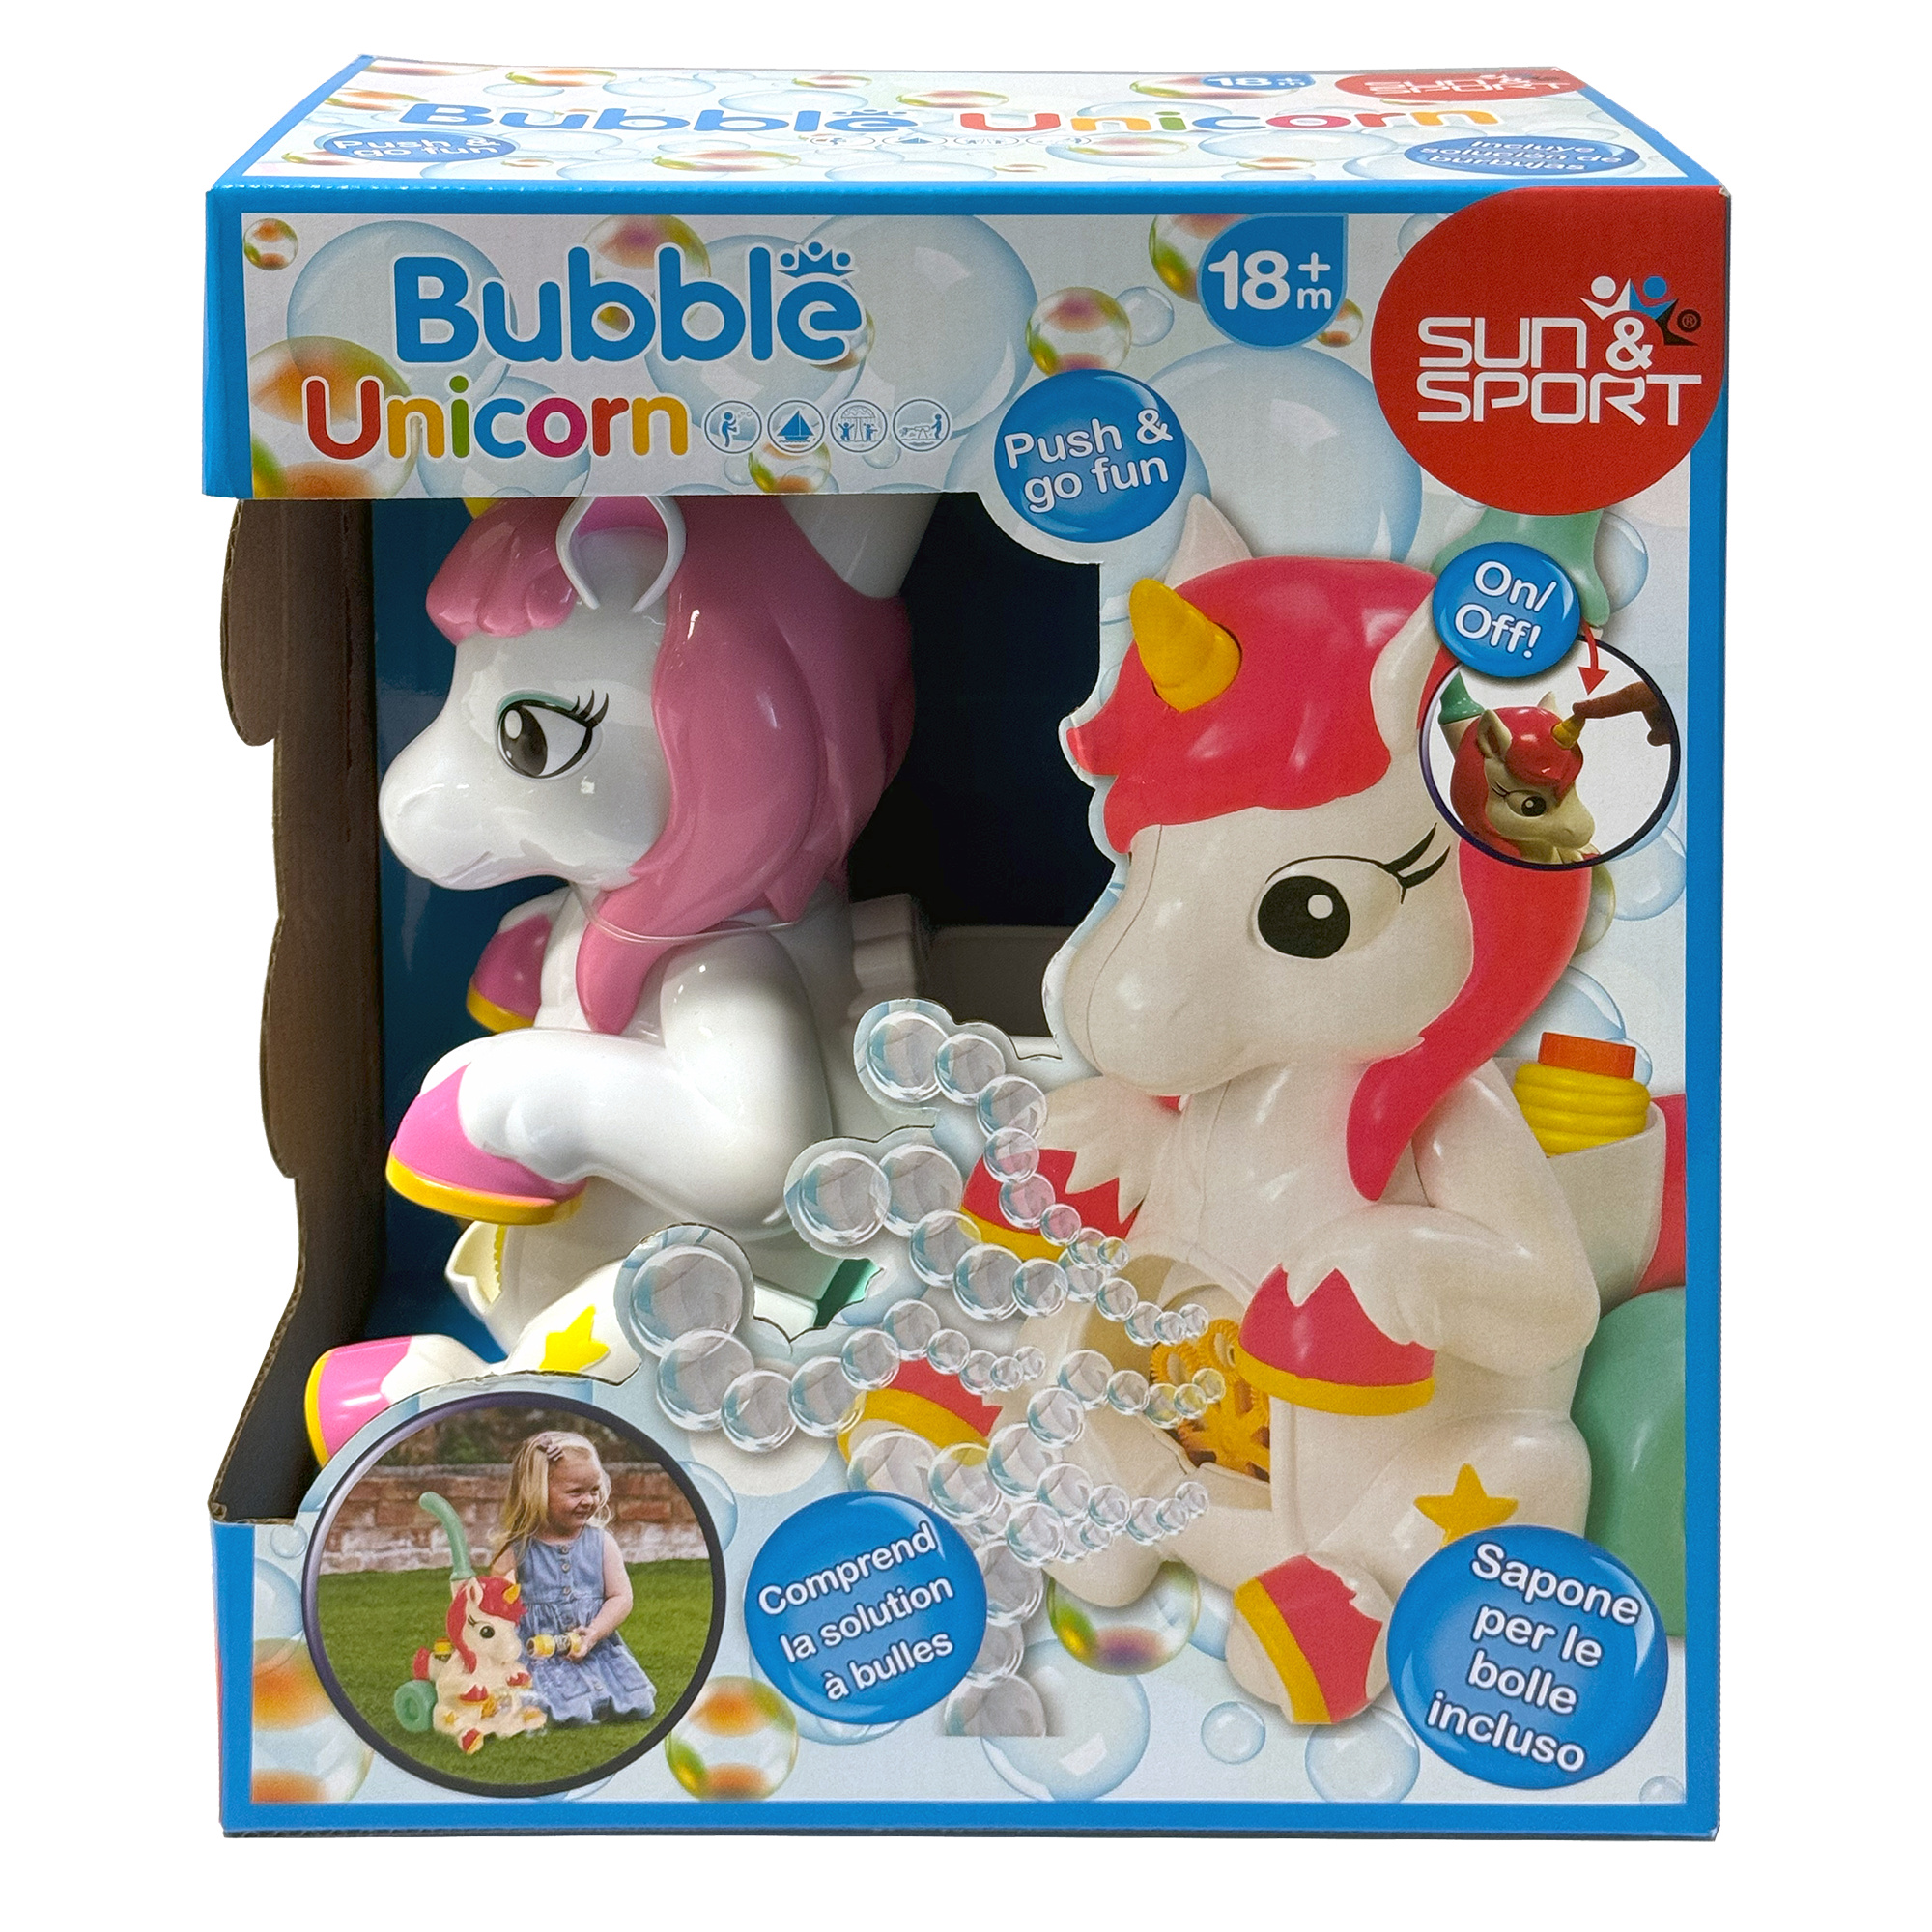 Bubble unicorn - SUN&SPORT